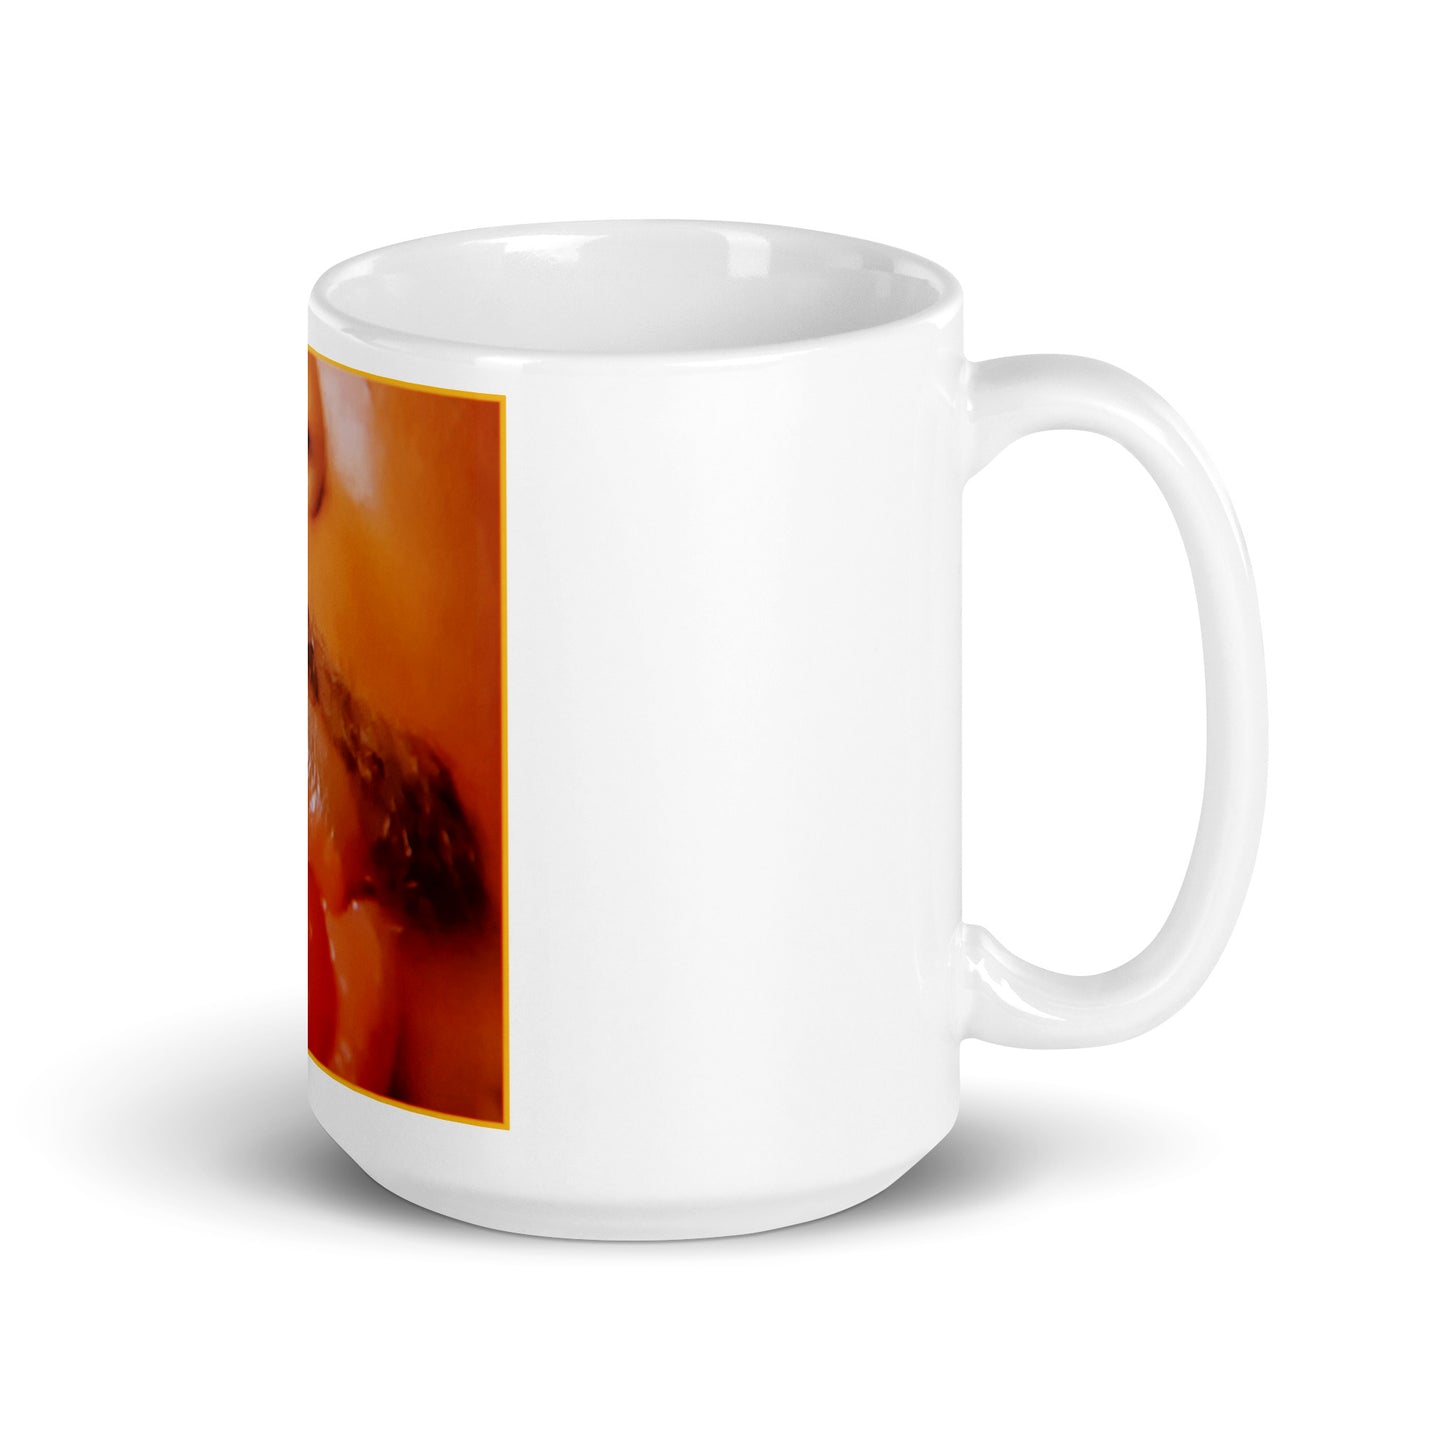 CARMINE DAVIS "I know..." - White glossy mug